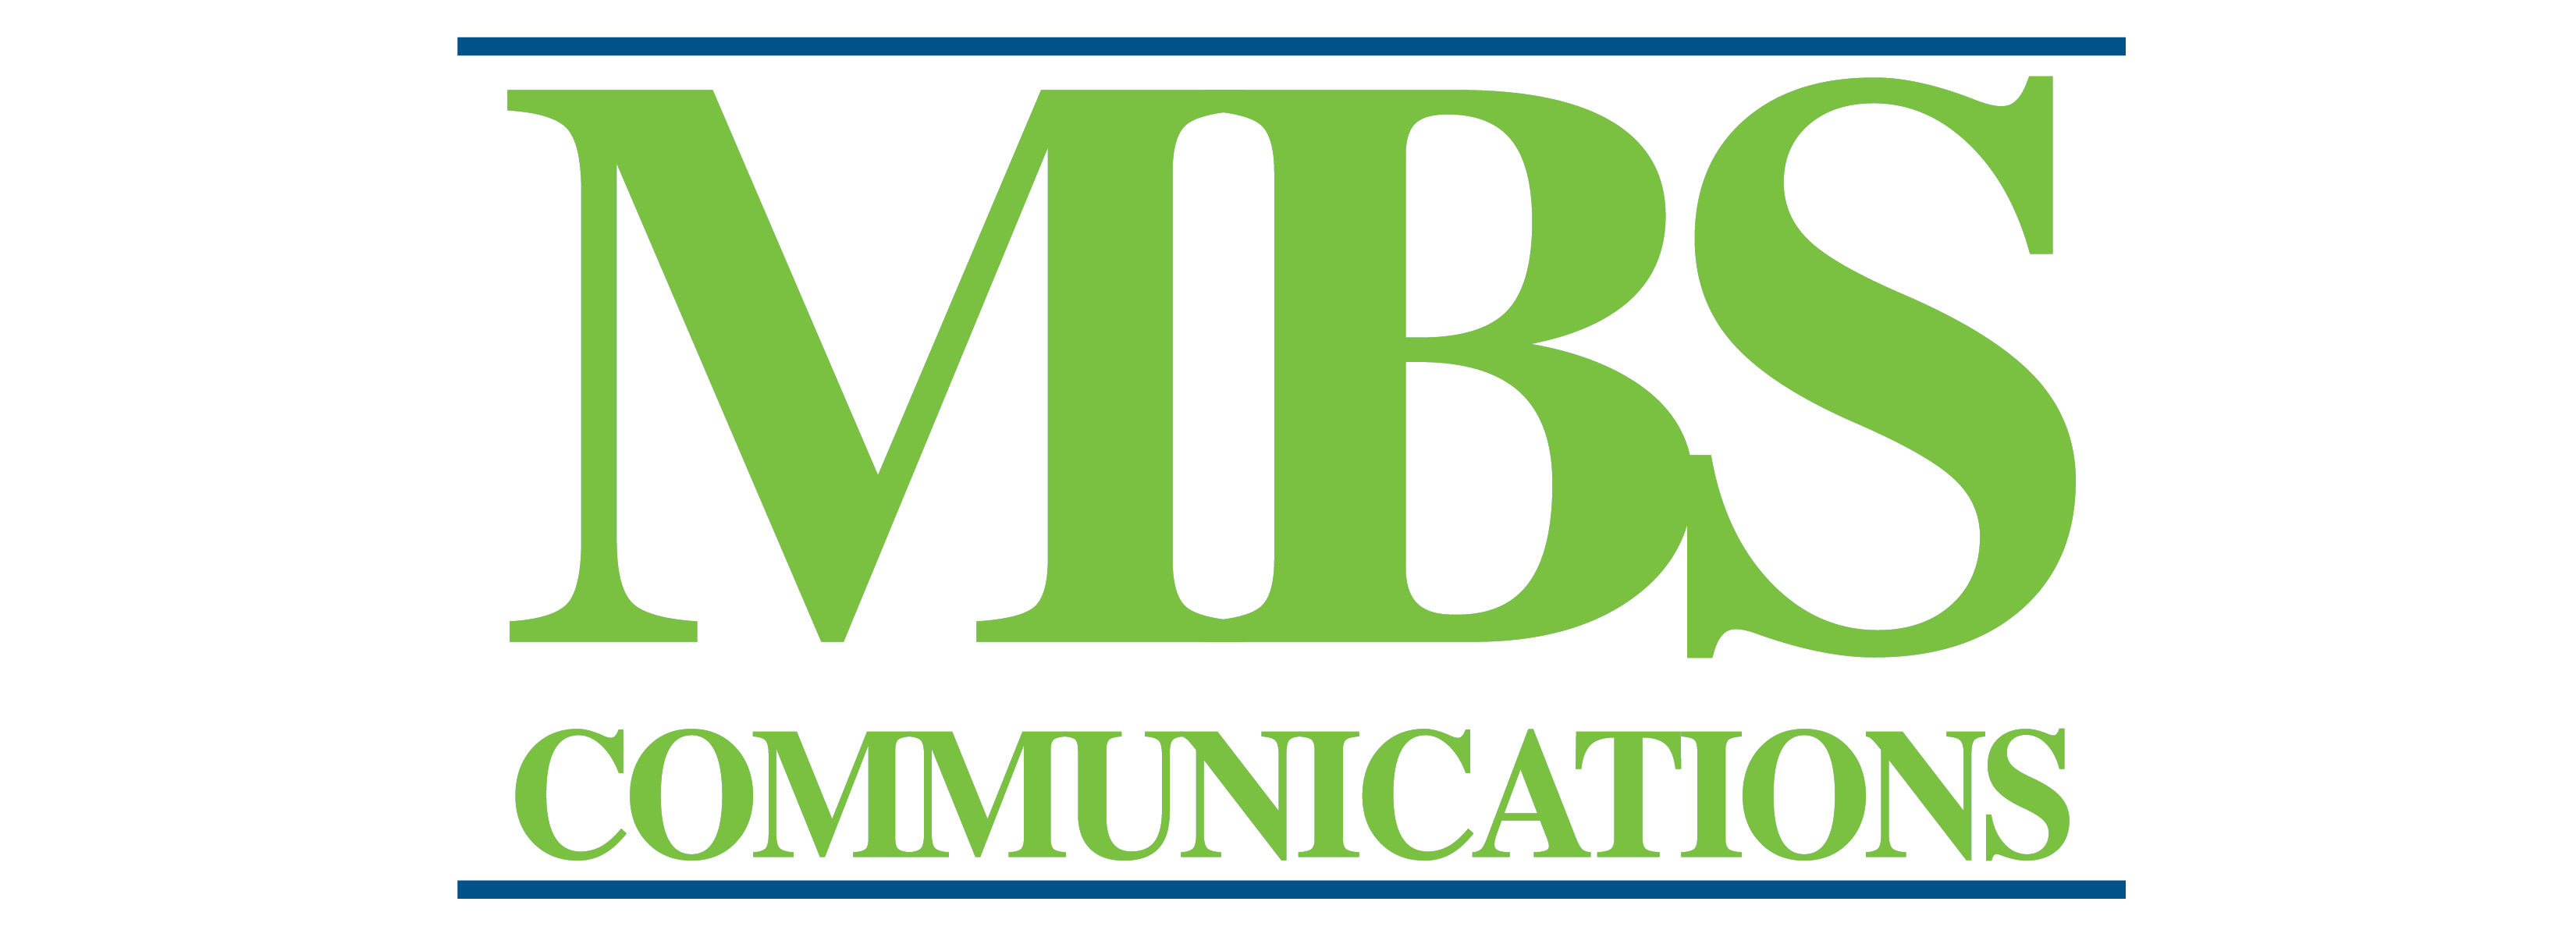 MBS Logo - MBS Logo | Marketing Supplies for Veterinarians, Groomers ...